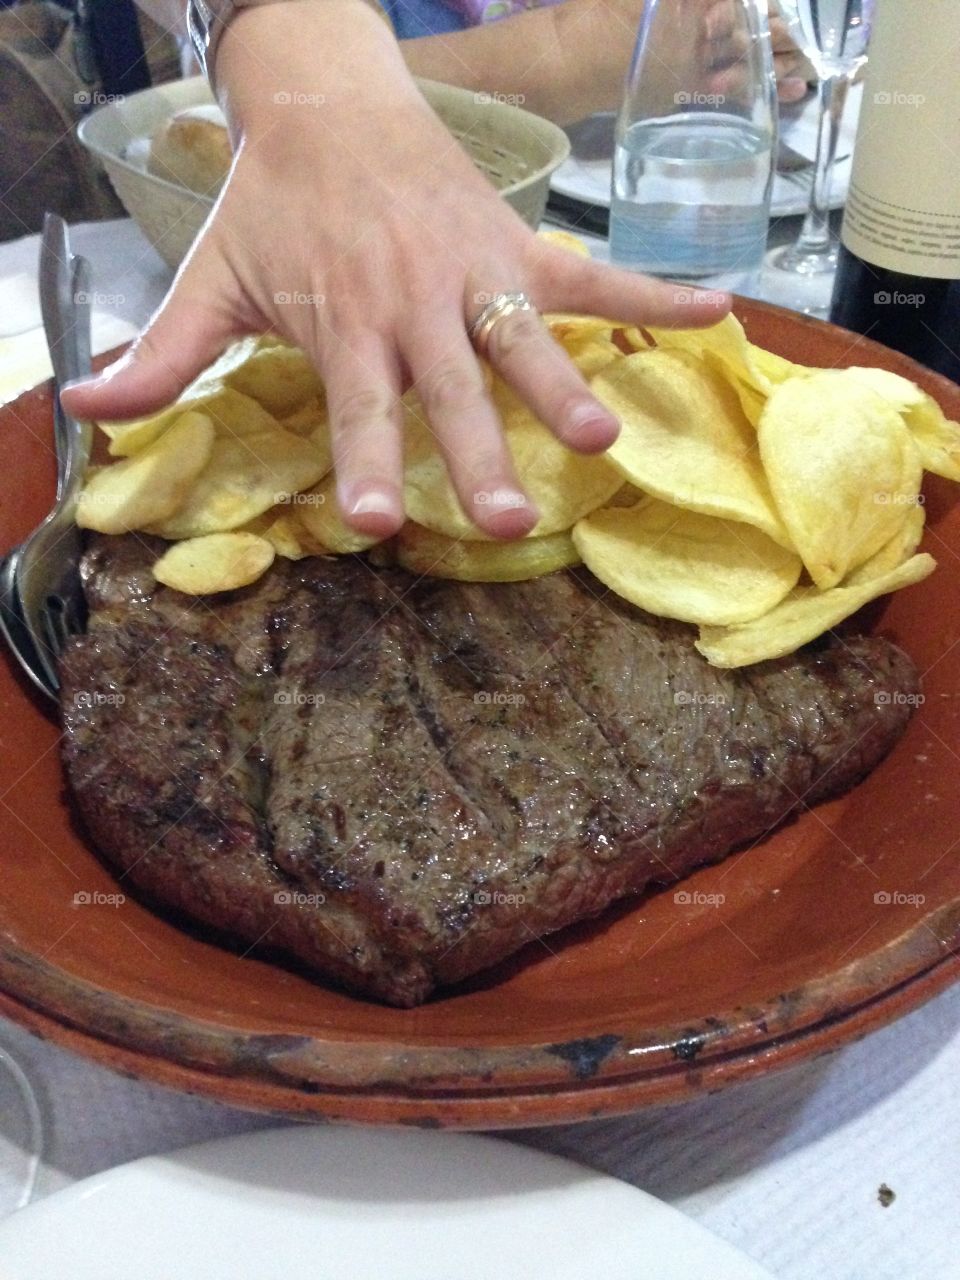 The great steak